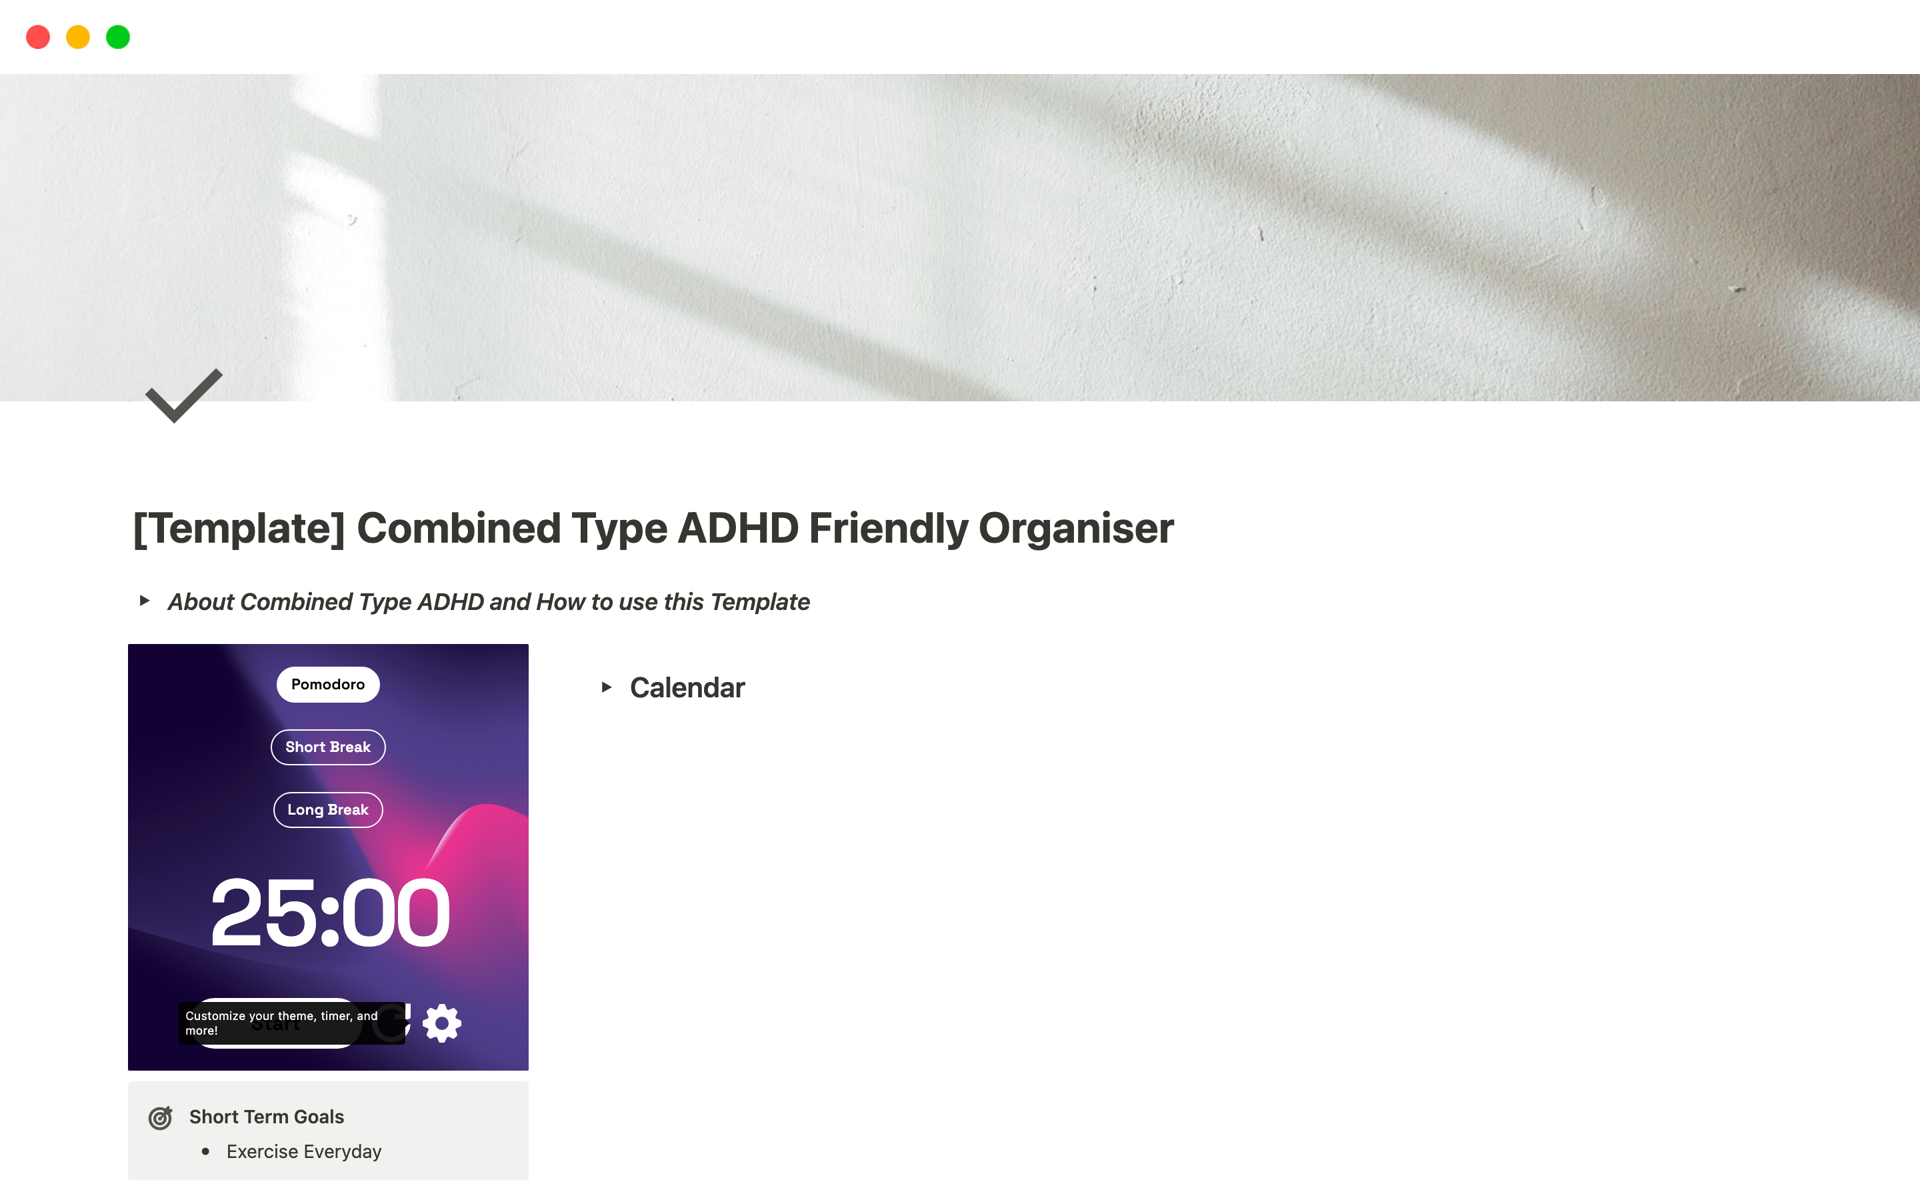 Mallin esikatselu nimelle Combined Type ADHD Friendly Organiser